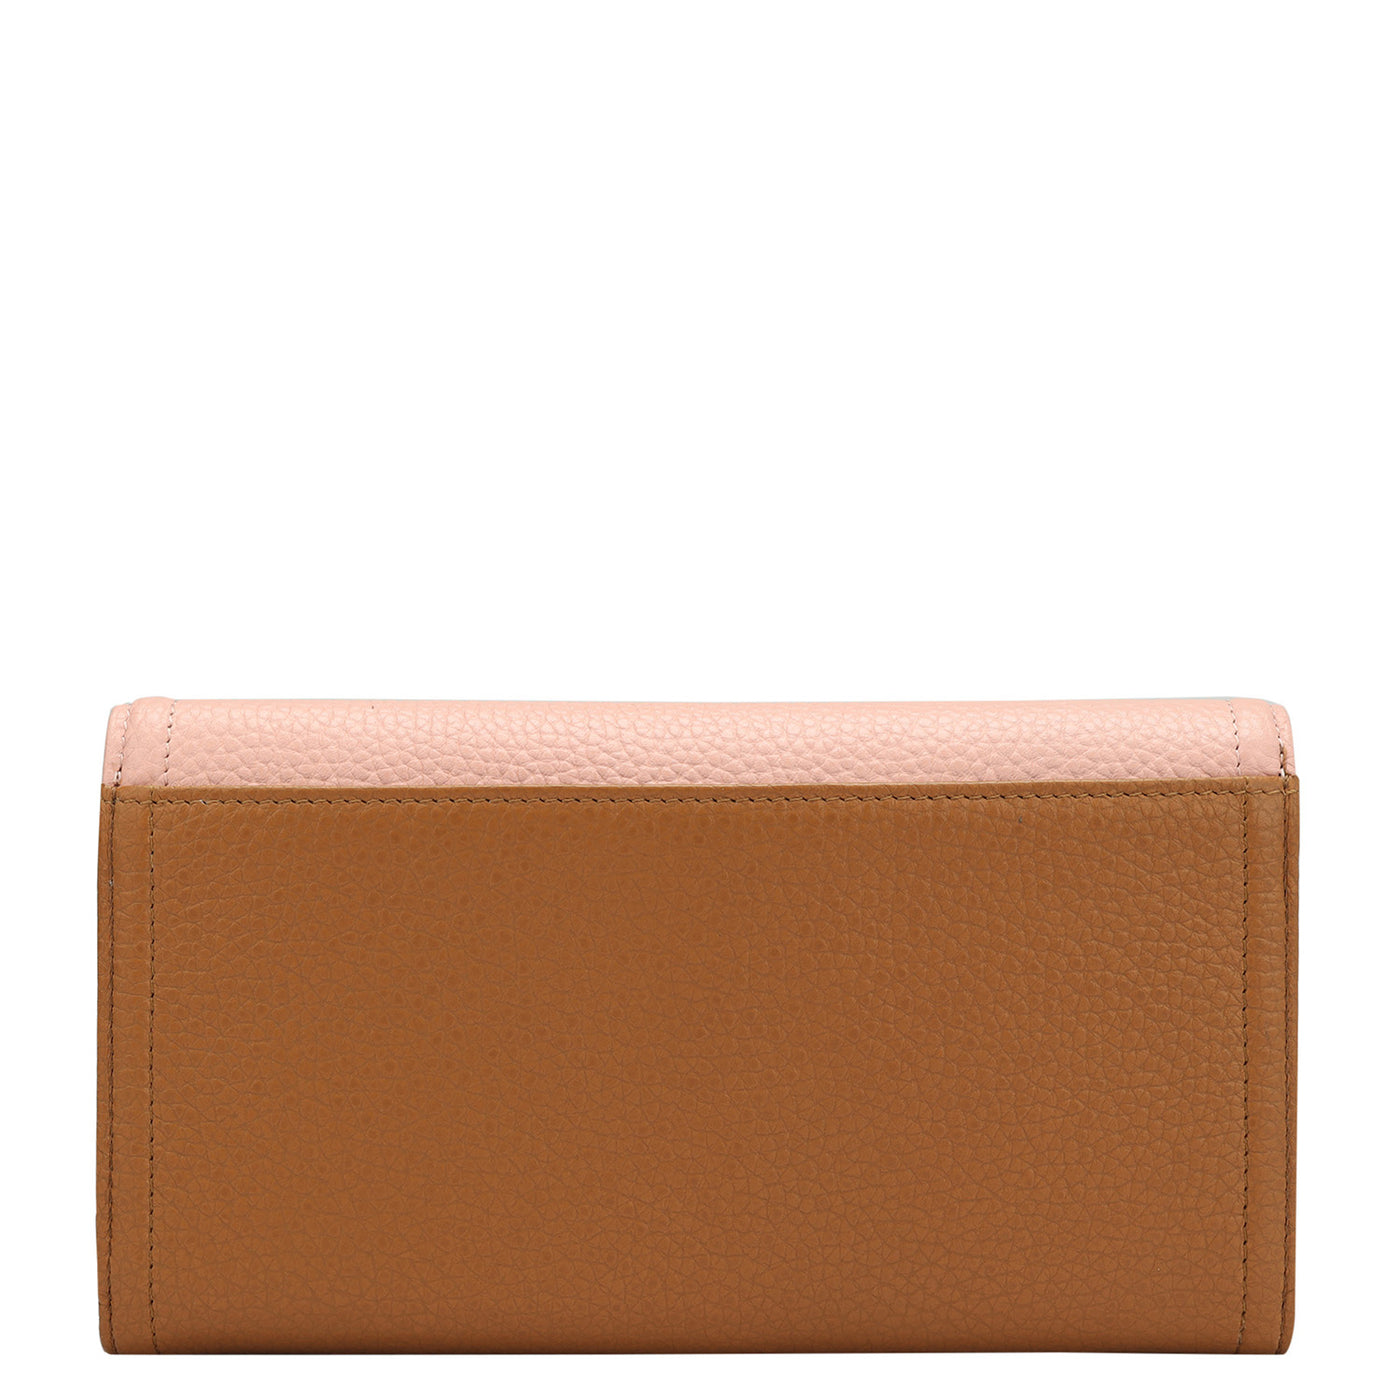 Wax Leather Ladies Wallet - Baby Pink & Tan